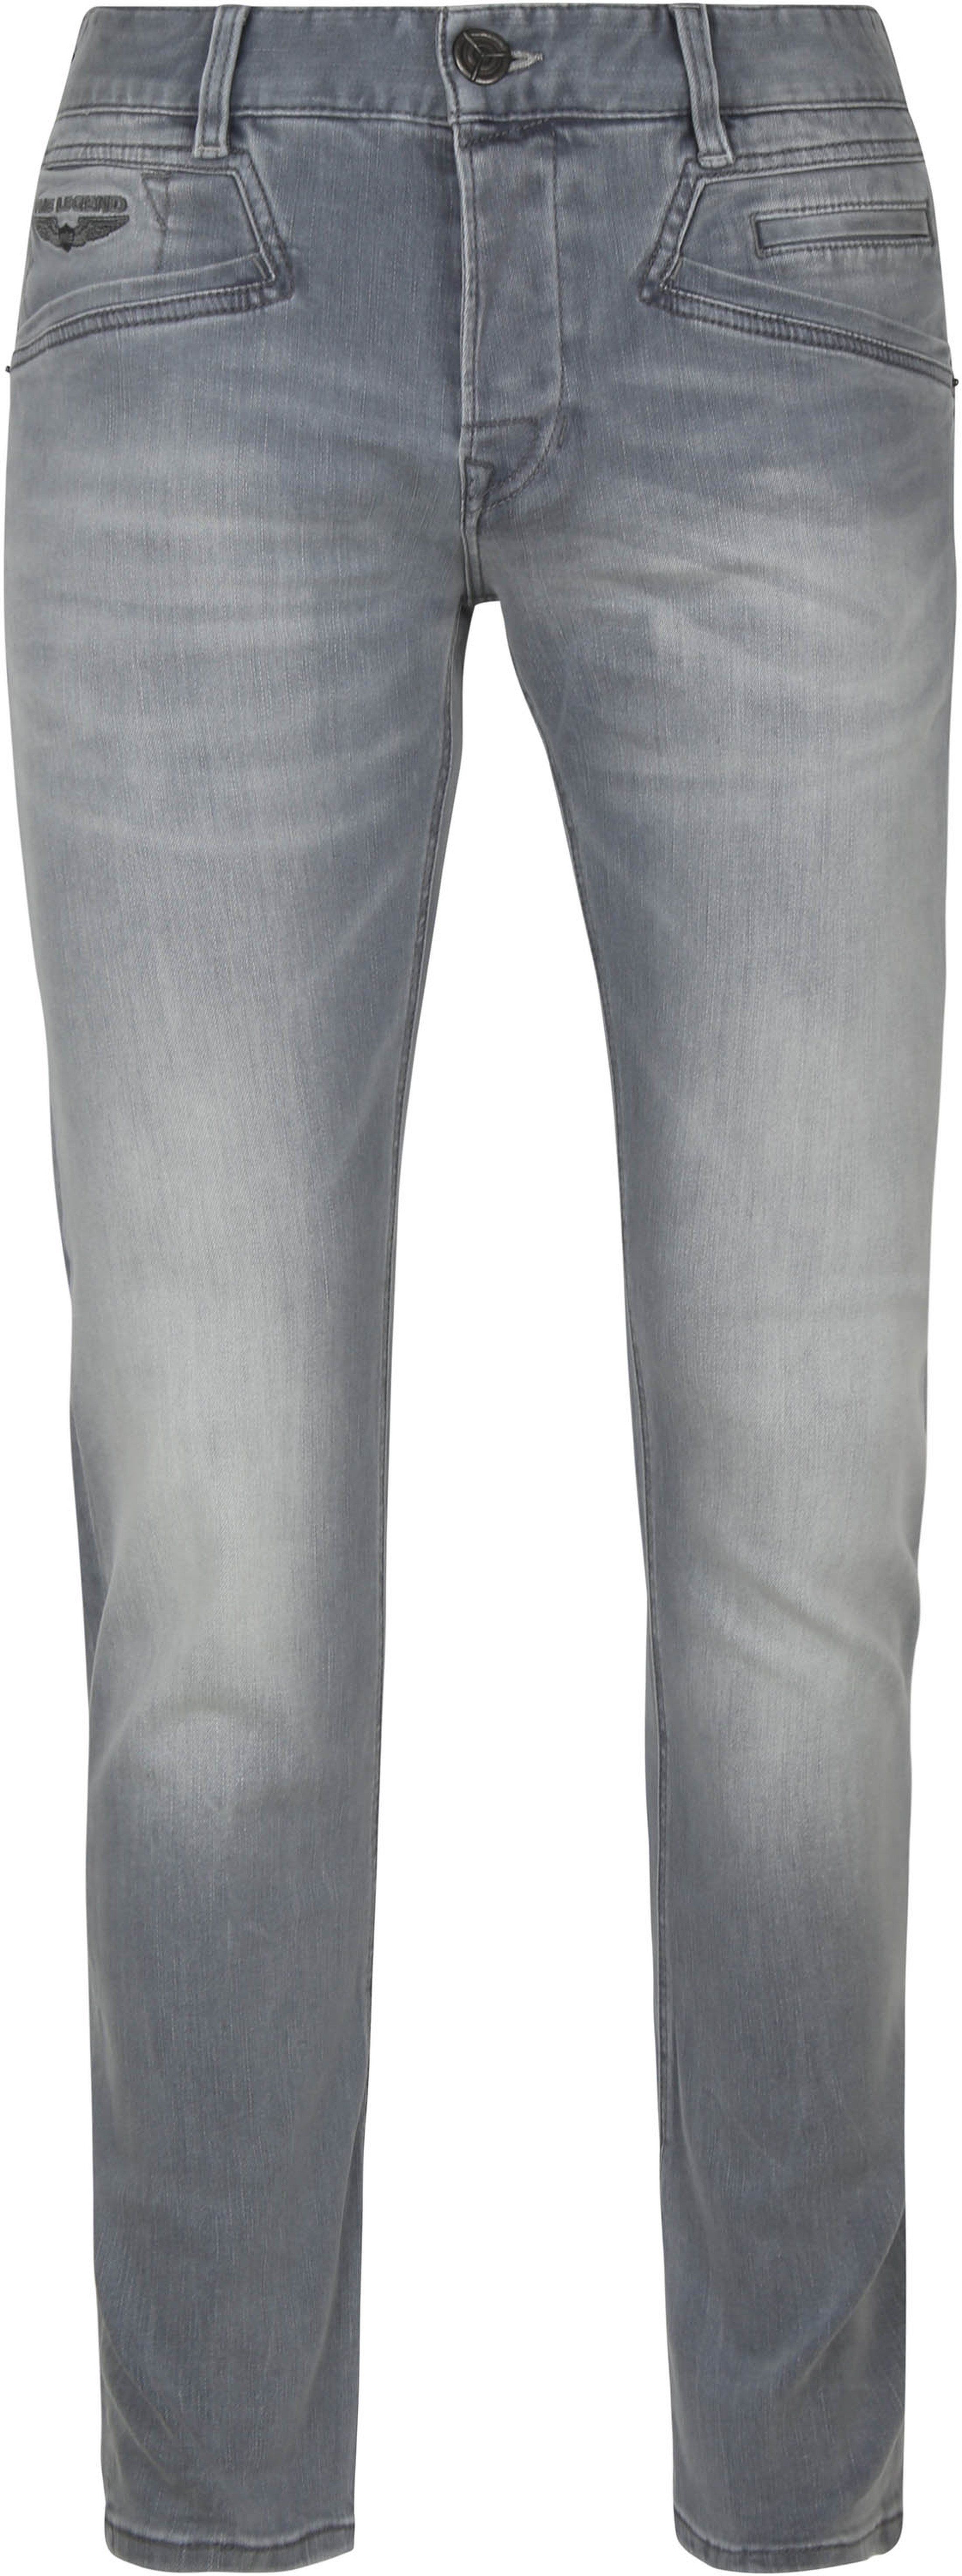 PME Legend Curtis Jeans Grey size W 29